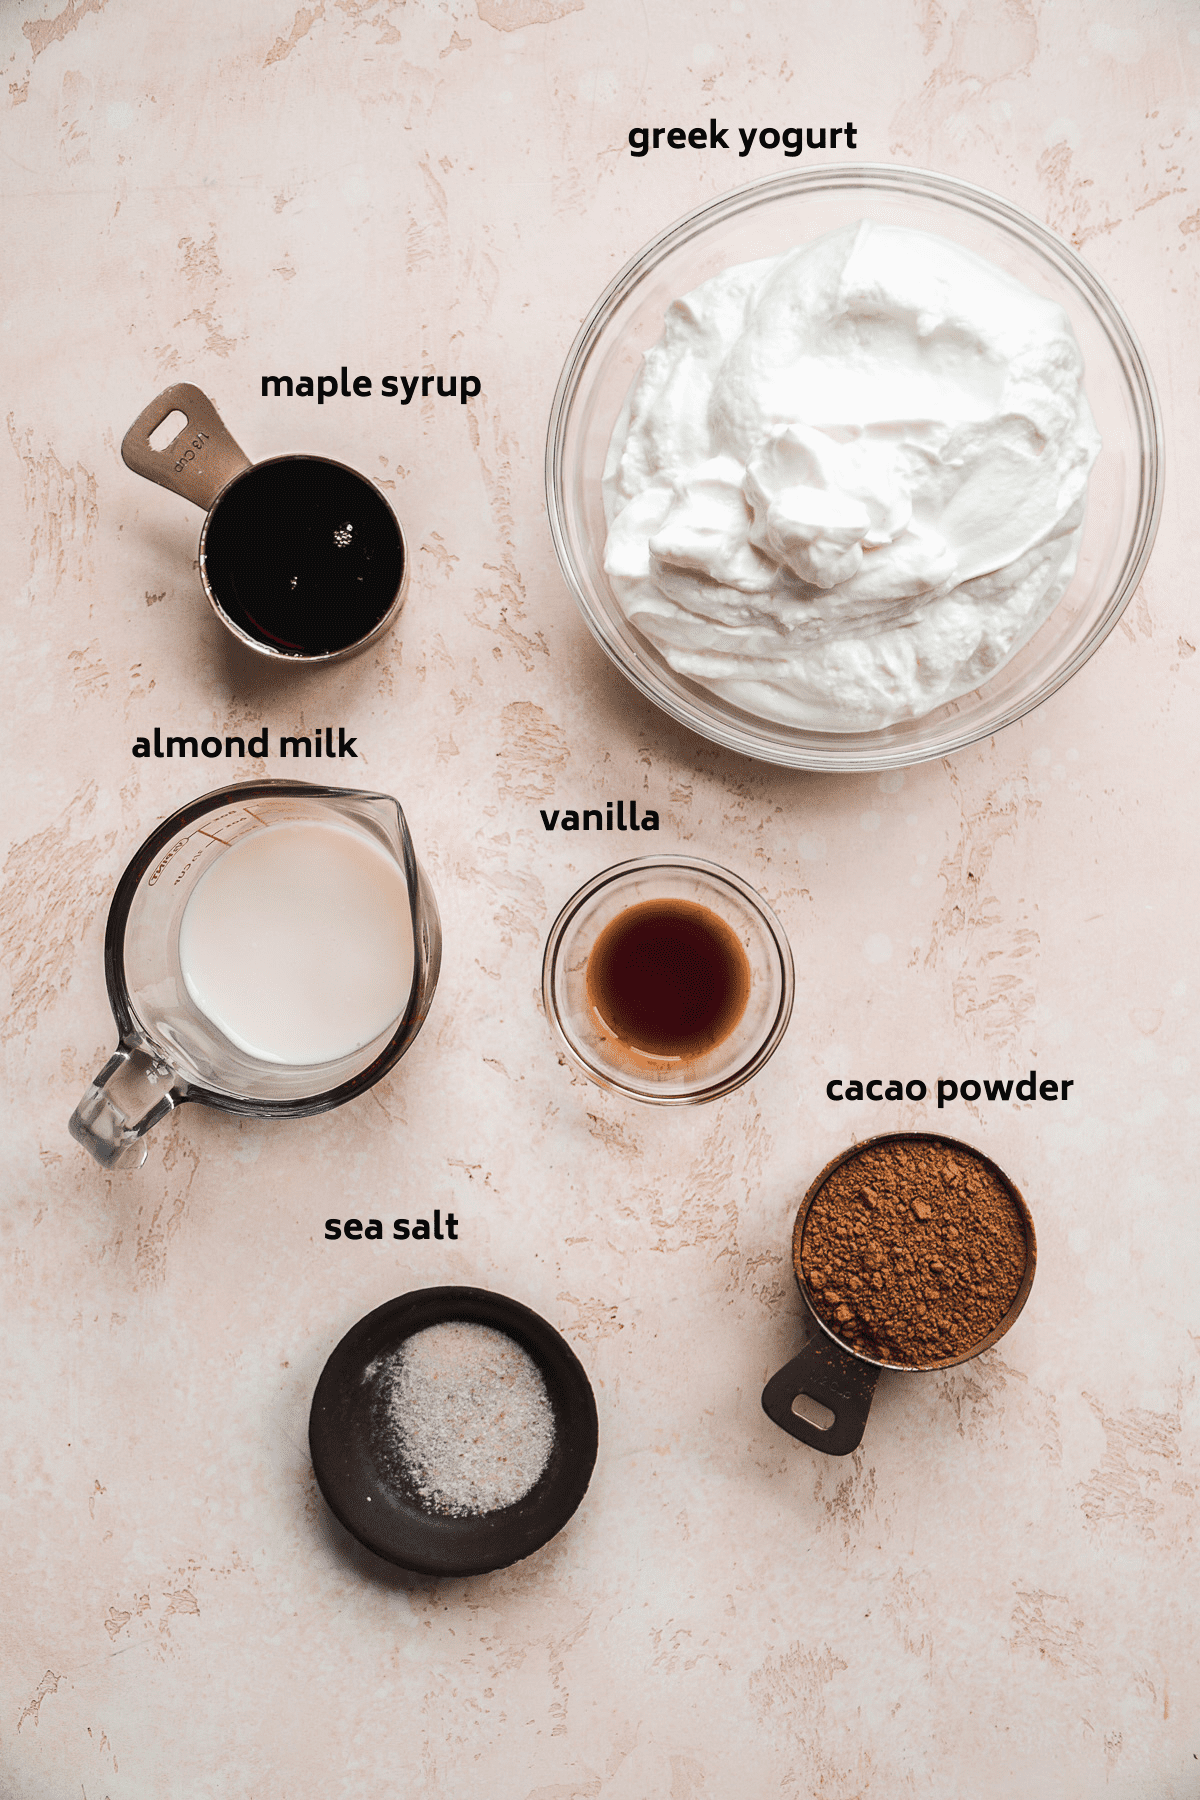 Chocolate frozen greek yogurt ingredients scattered on a pink surface.